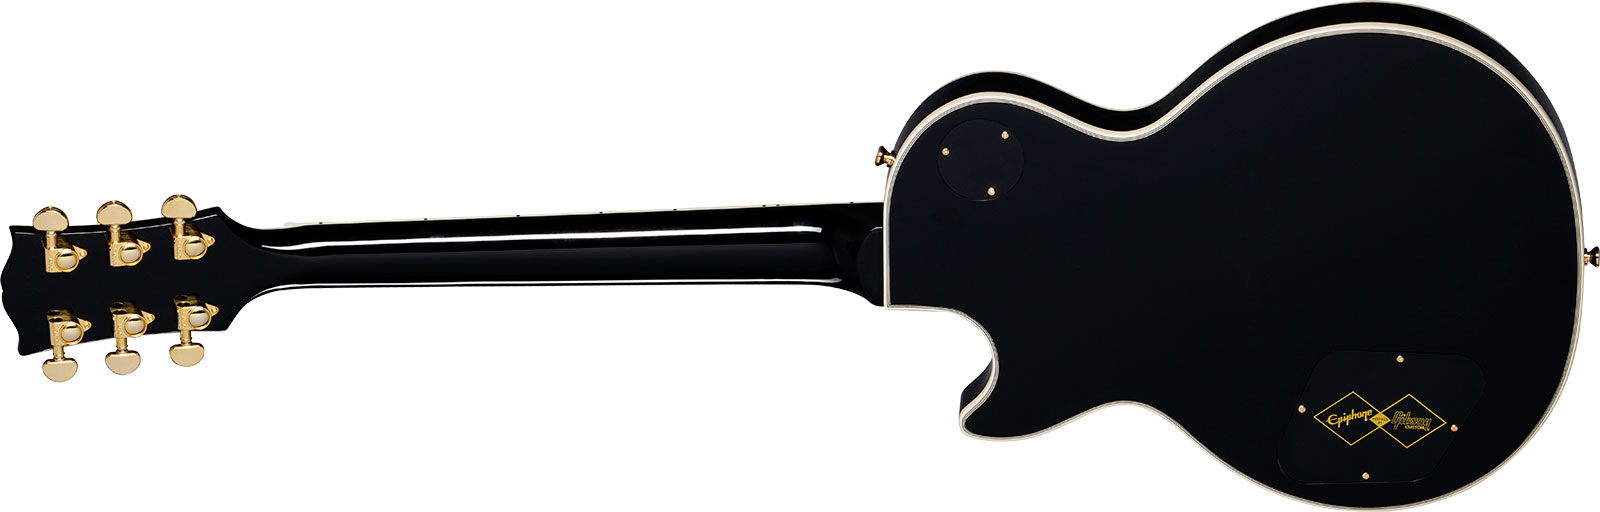 Epiphone Les Paul Custom Inspired By 2h Ht Eb - Ebony - Enkel gesneden elektrische gitaar - Variation 1